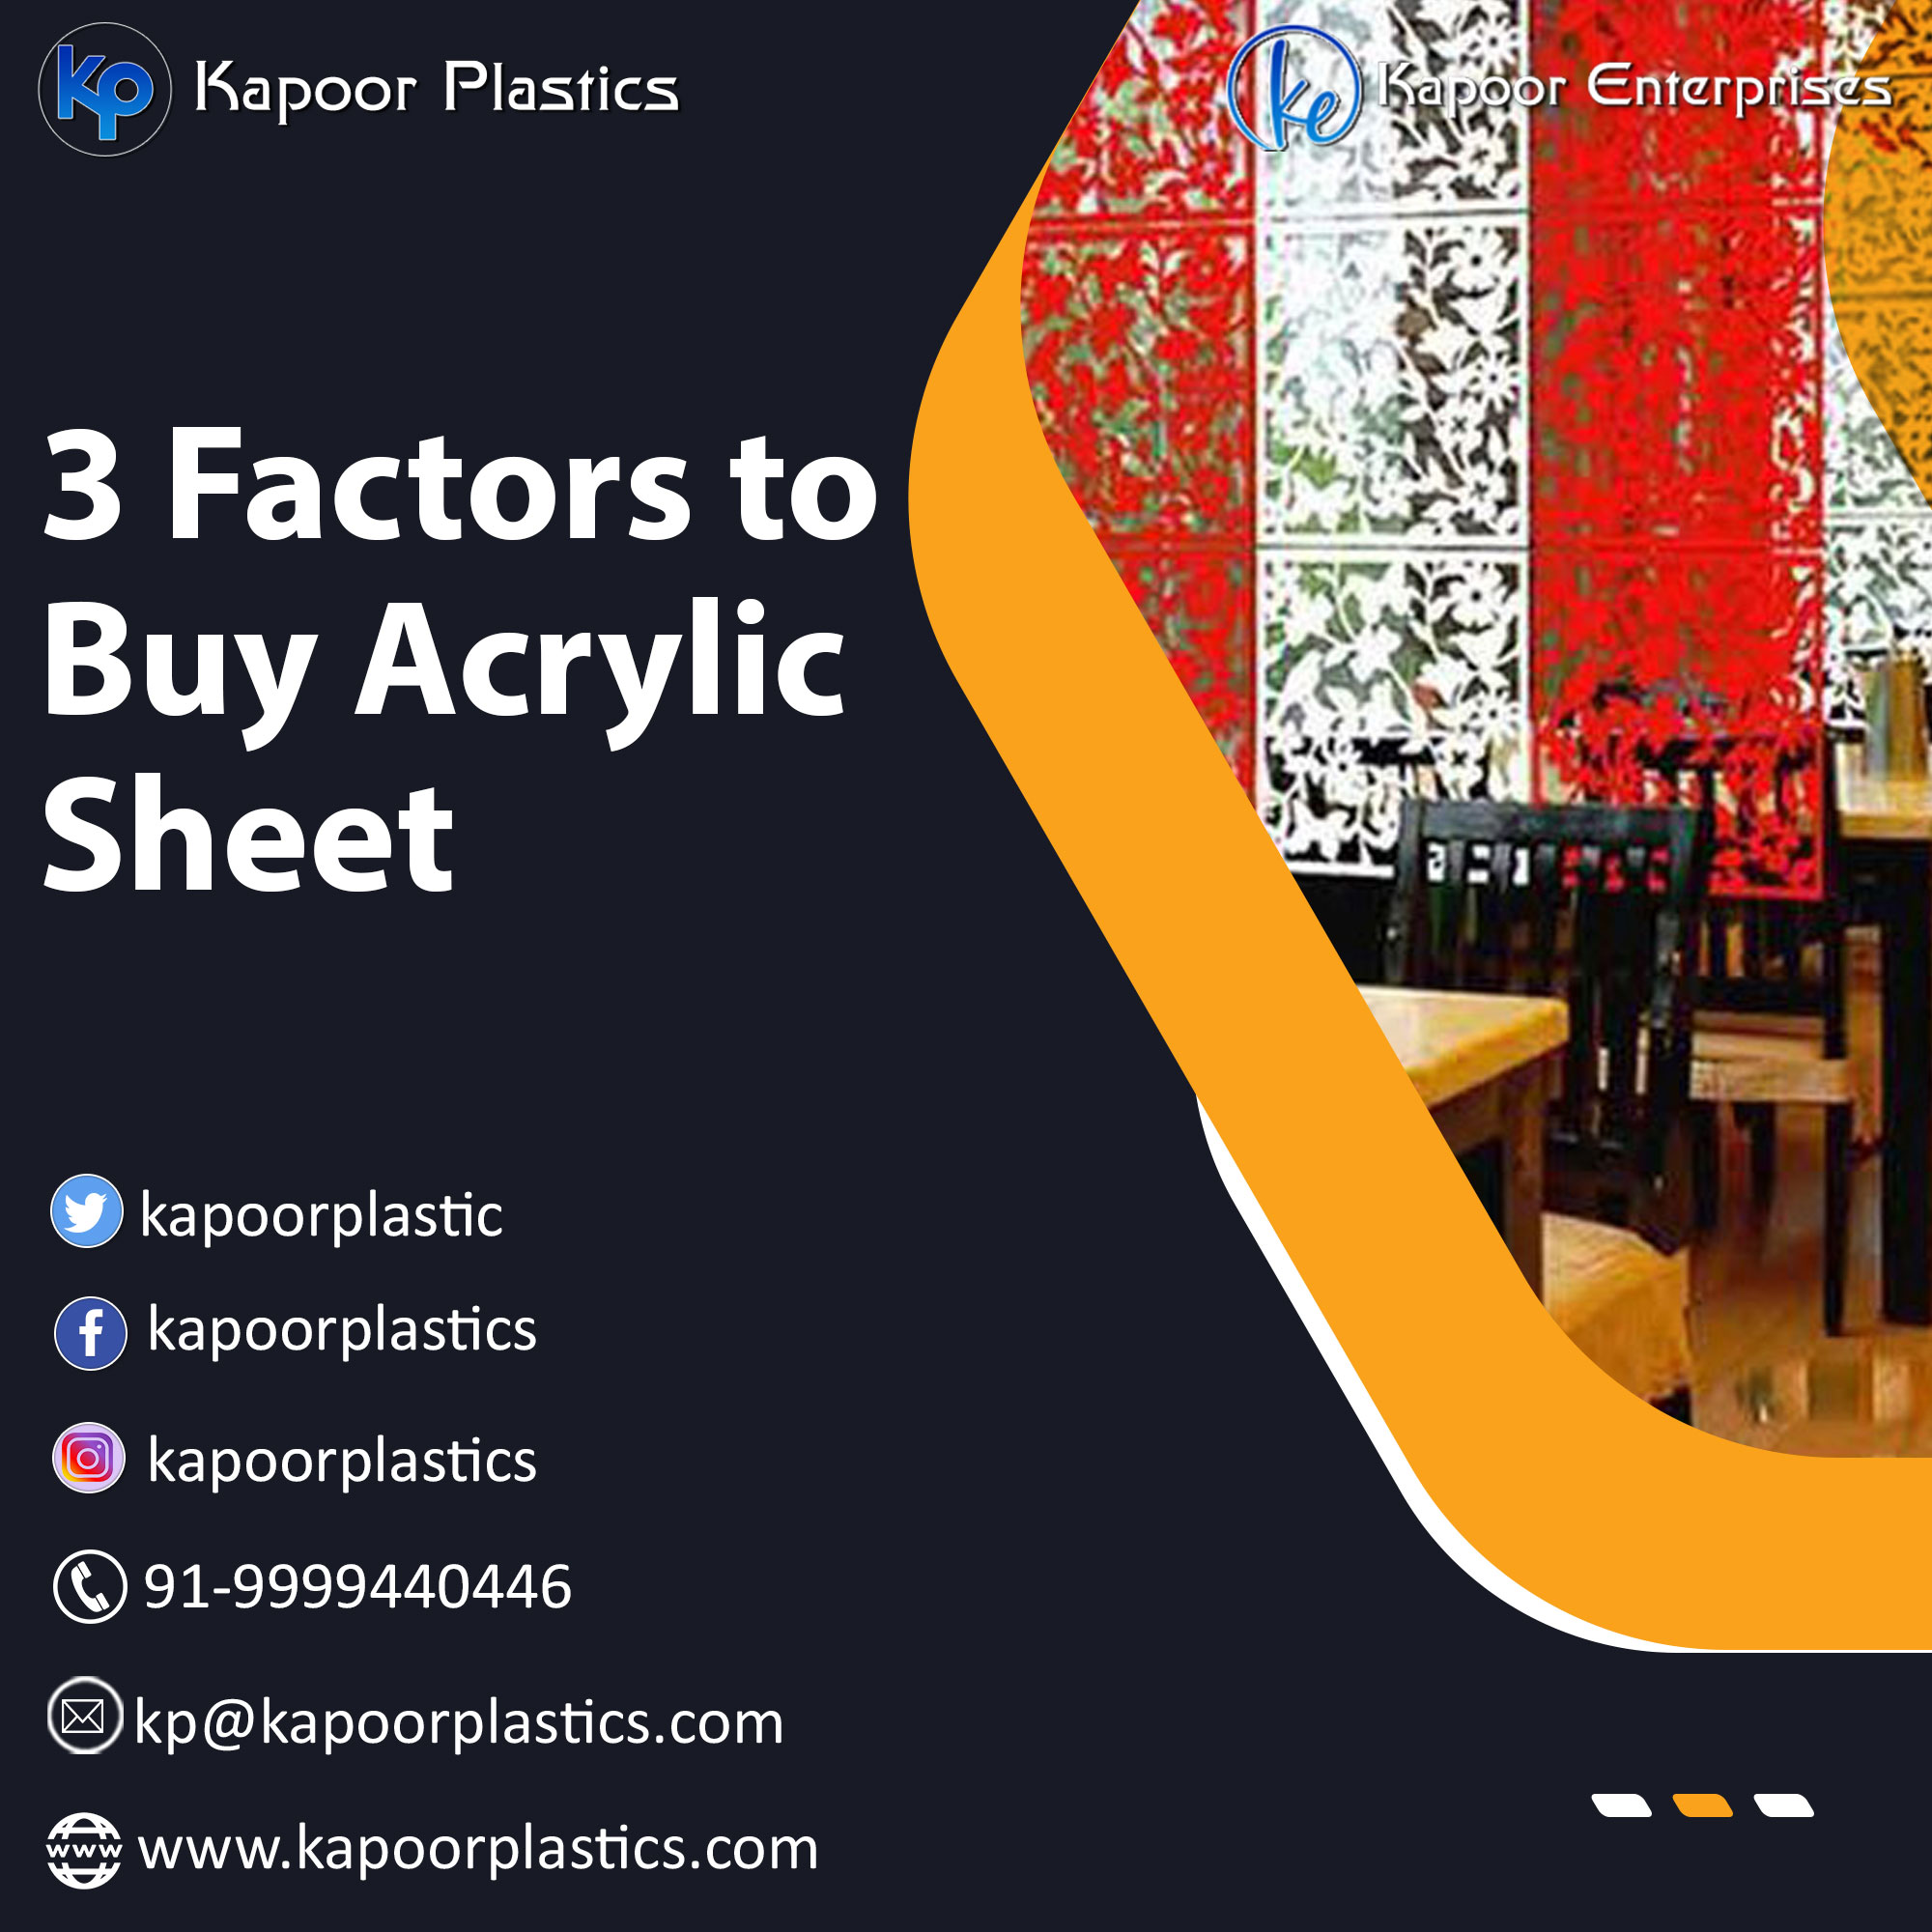 3 Factors to Buy Acrylic Sheet - Image 1